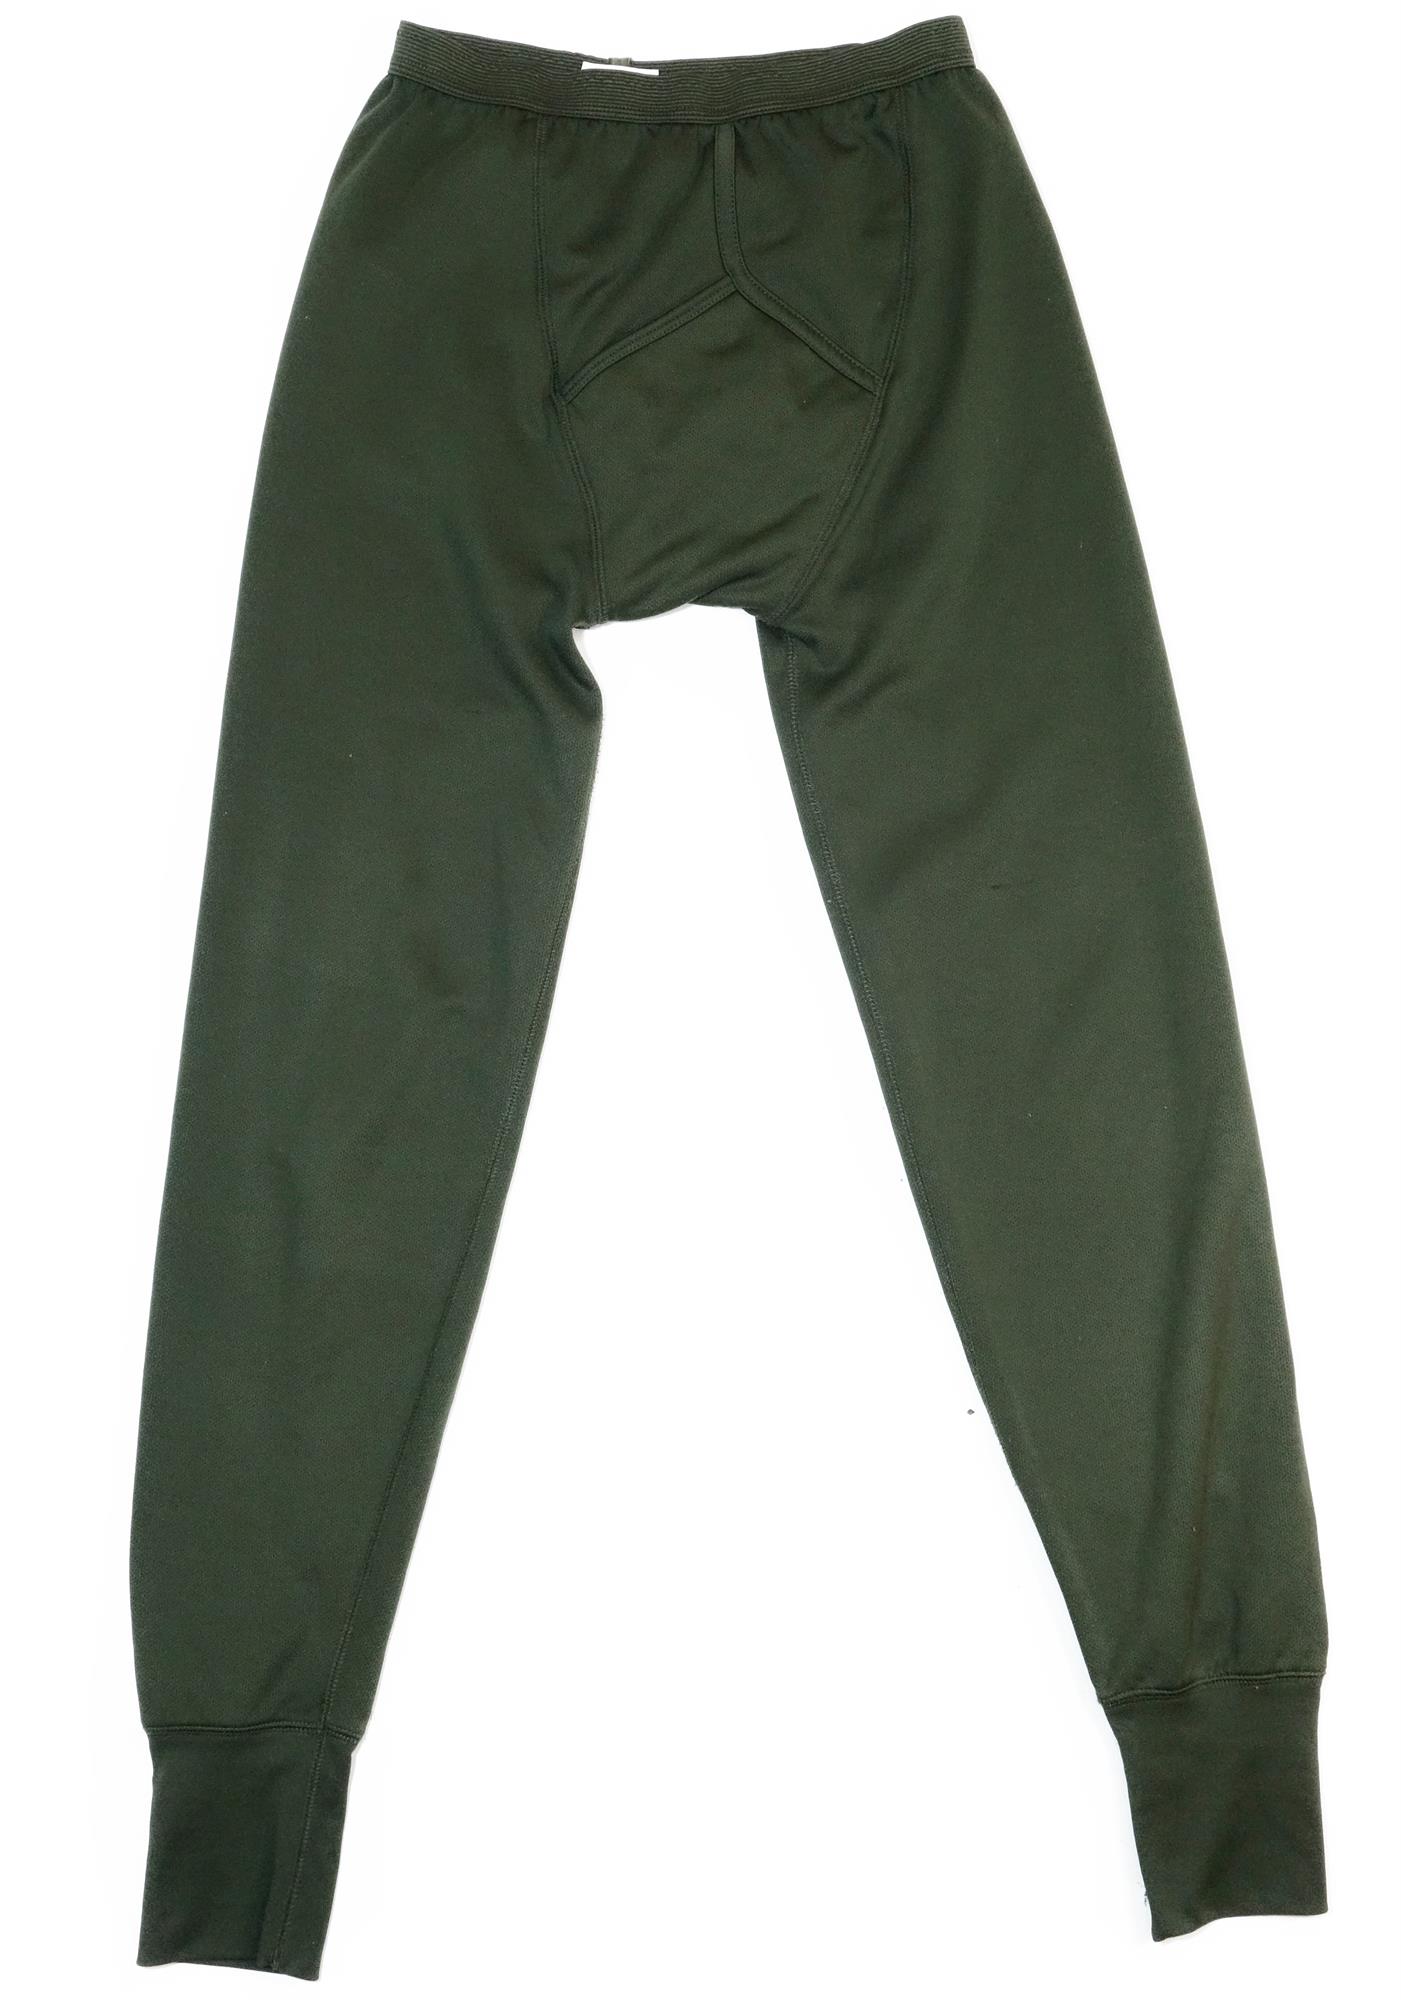 British Army Surplus Olive Long Johns Drawers Thermal Underwear